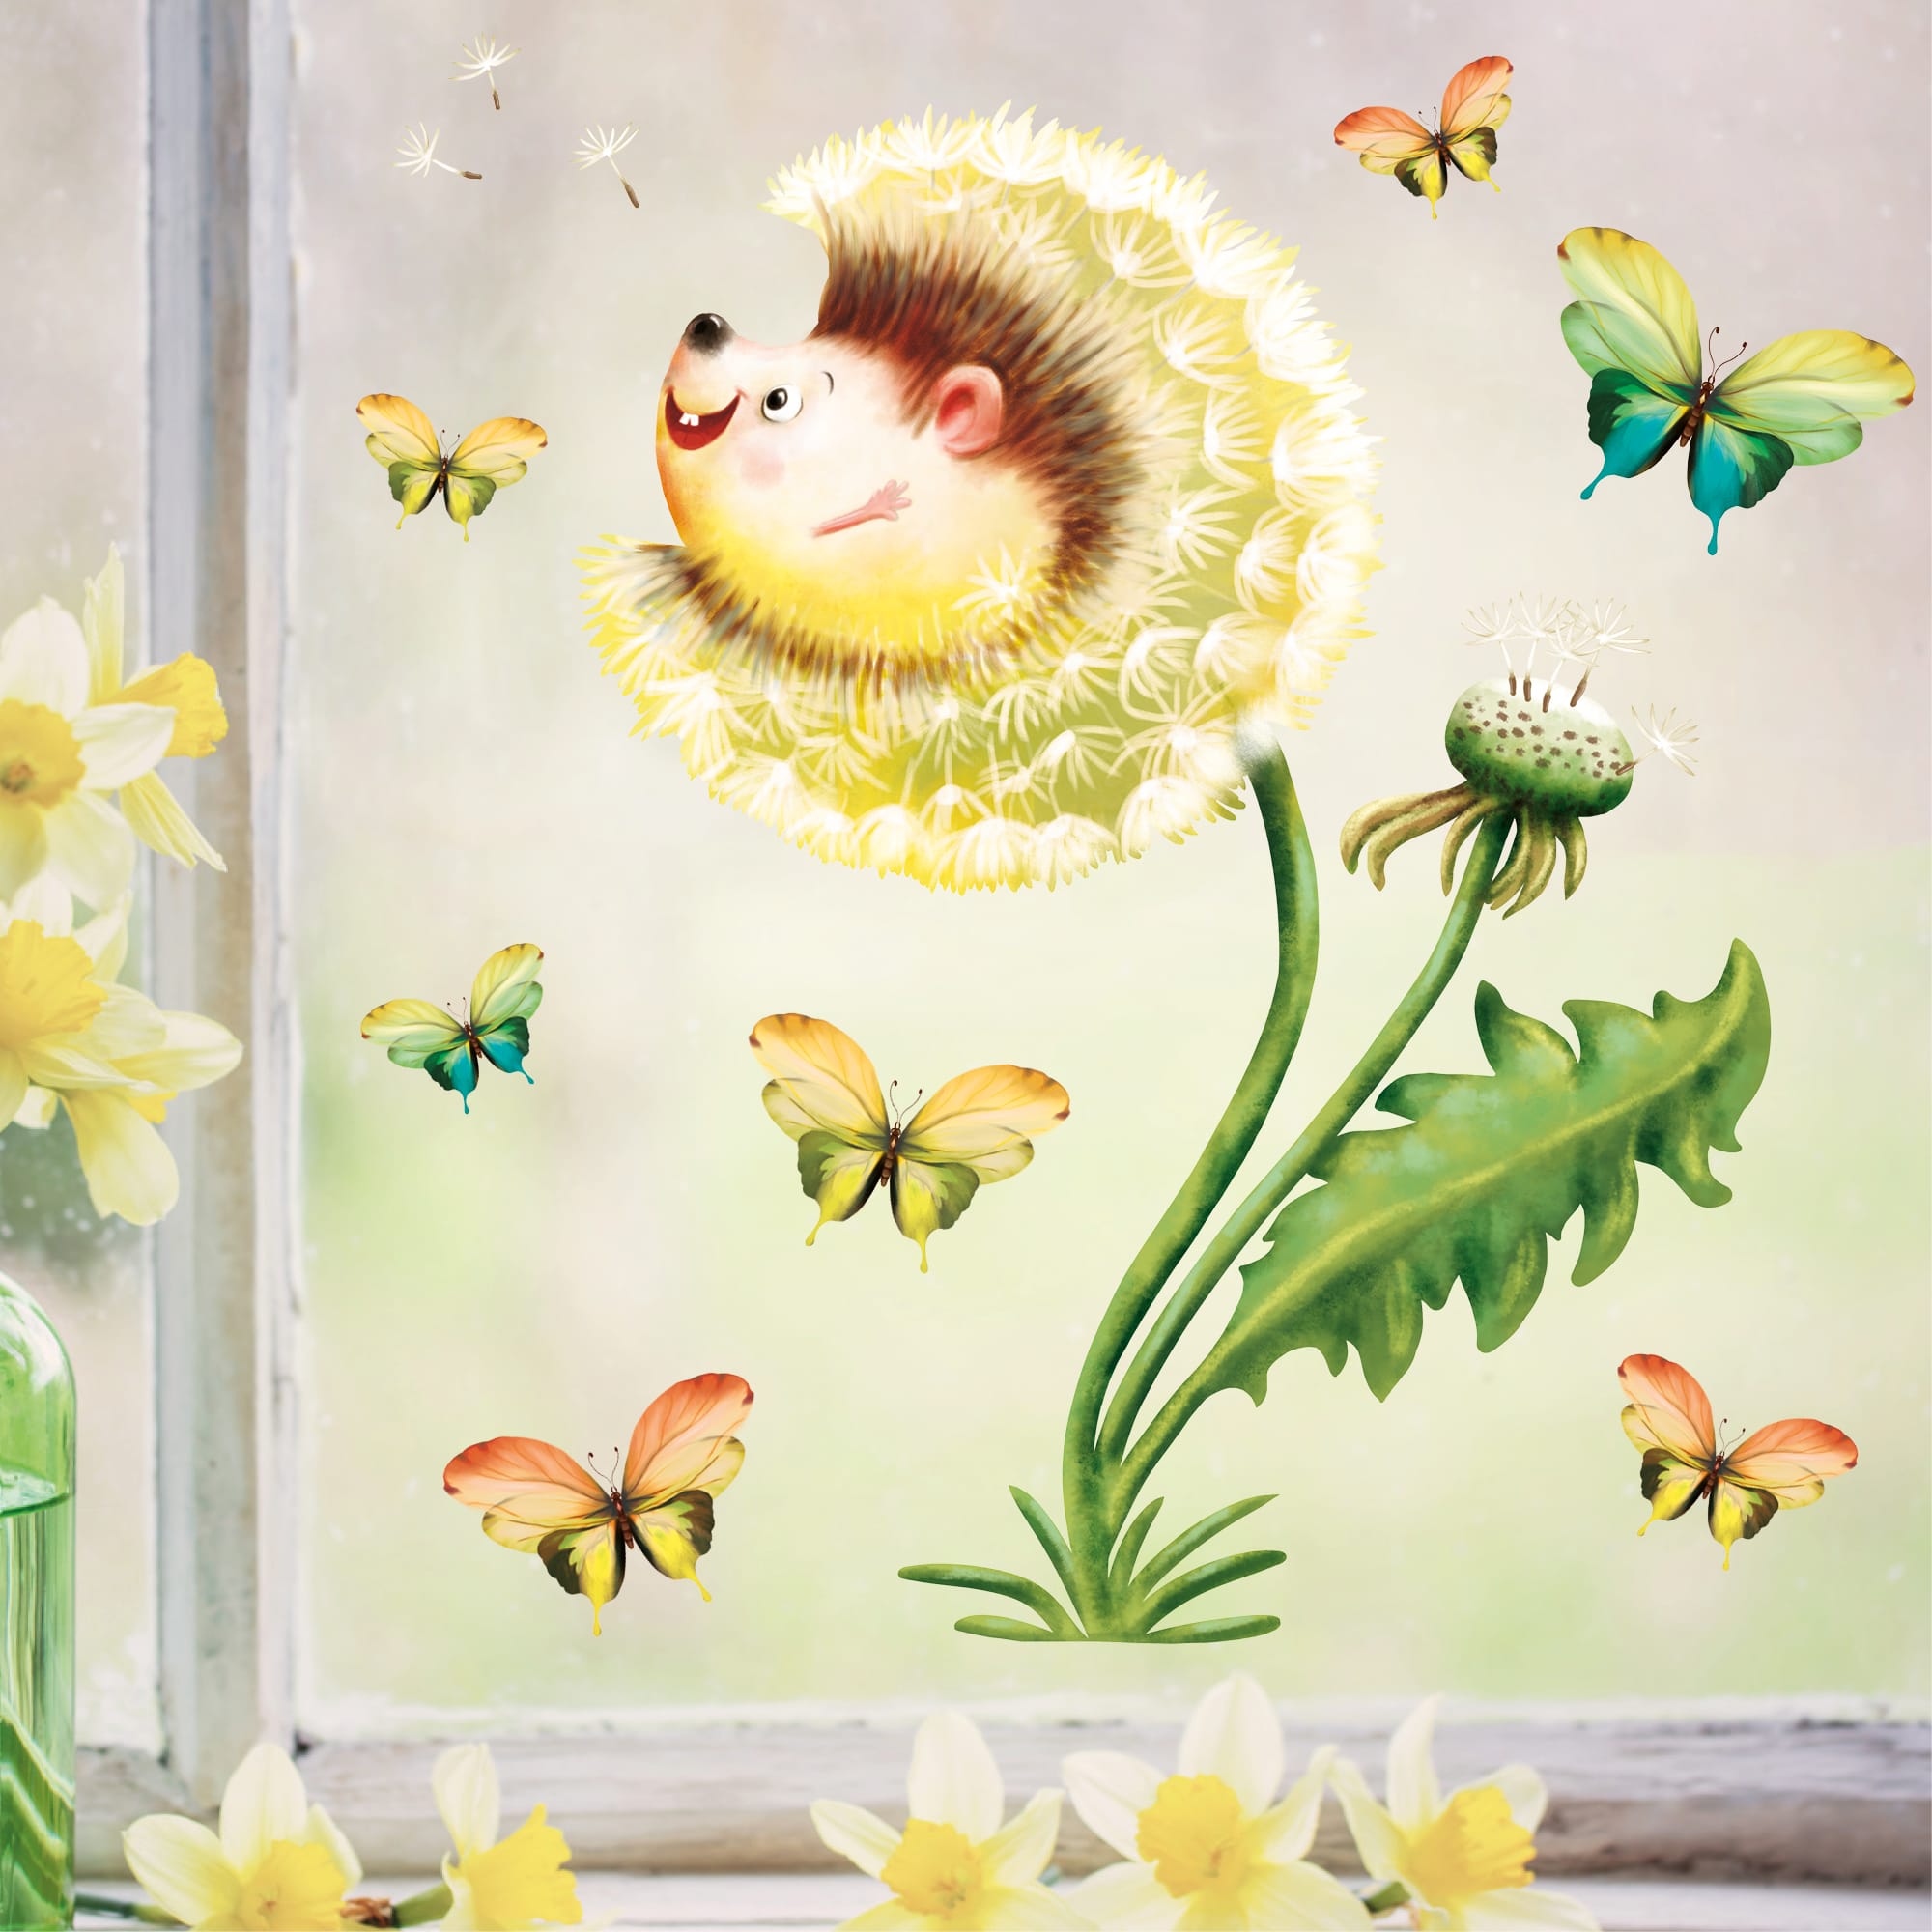 Wiederverwendbares Fensterbild Frühling Ostern Igel Pusteblume Schmetterlinge Fensterdeko Kinderzimmer Kind, Frühlingsdeko, Osterdeko